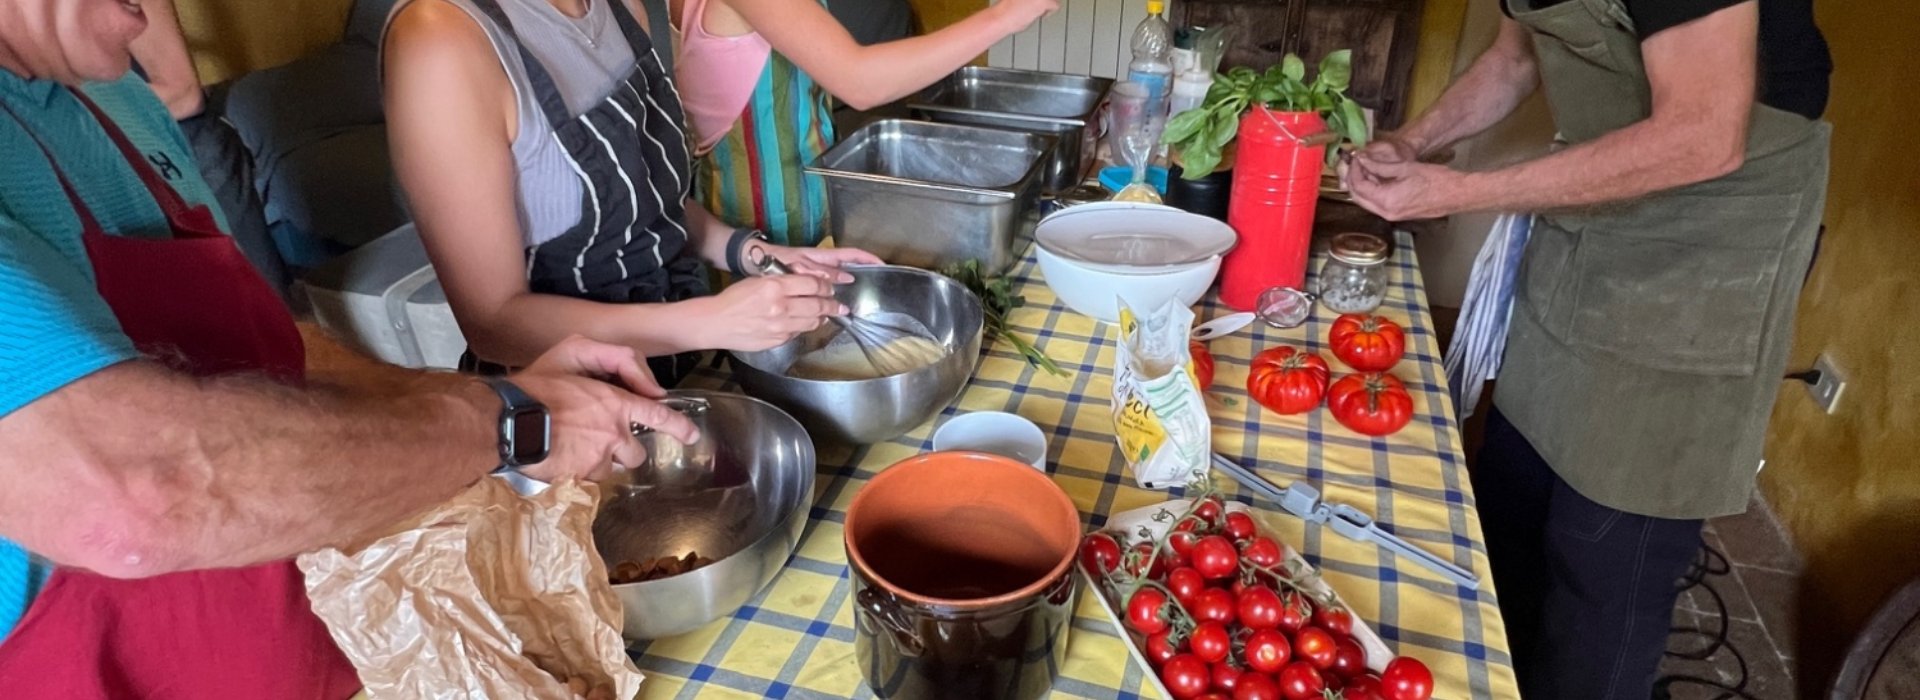 Home cooking class in Chianti Classico